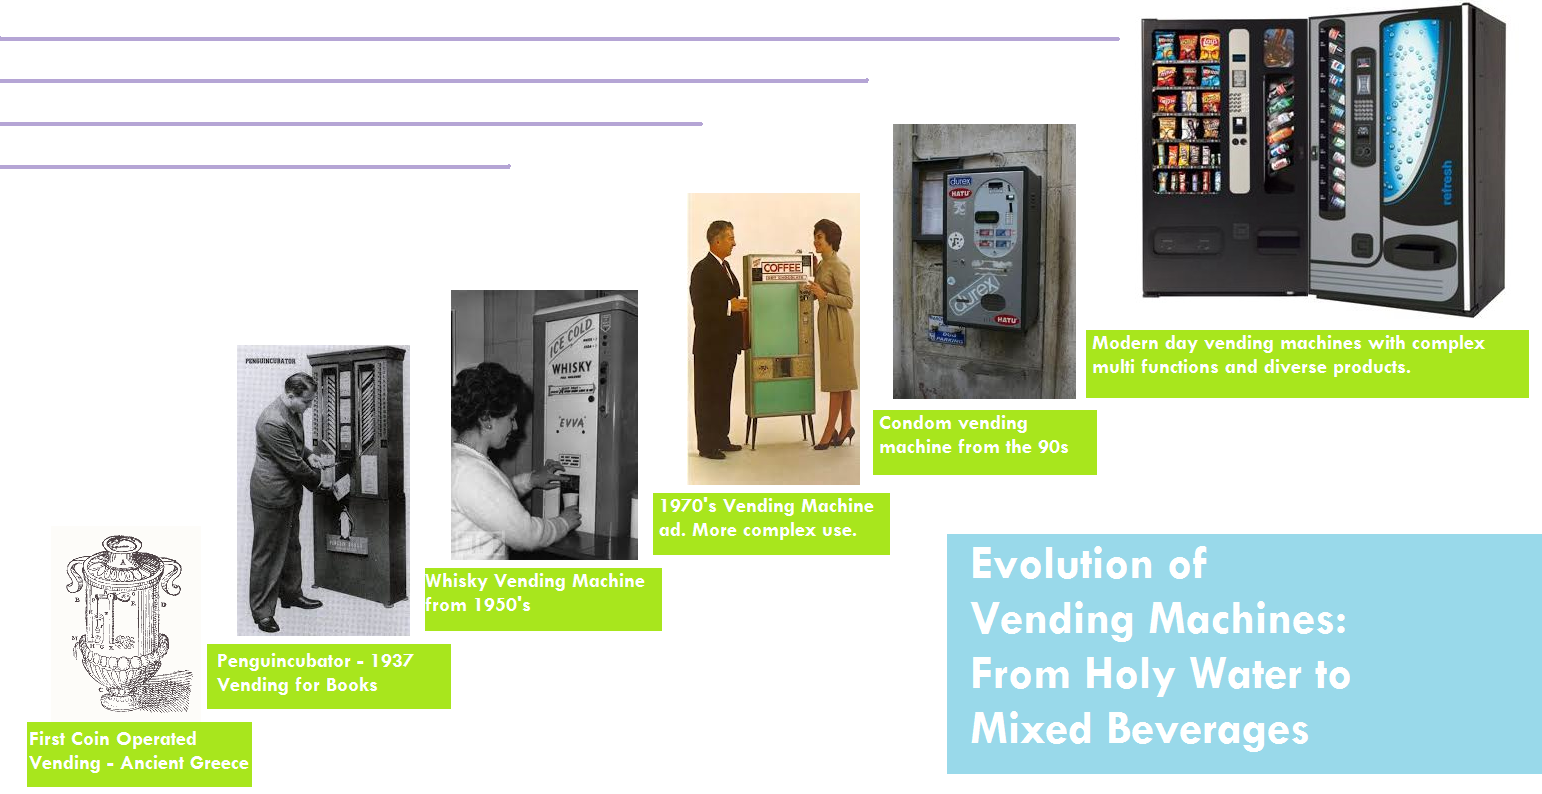 Evolution of vending machines